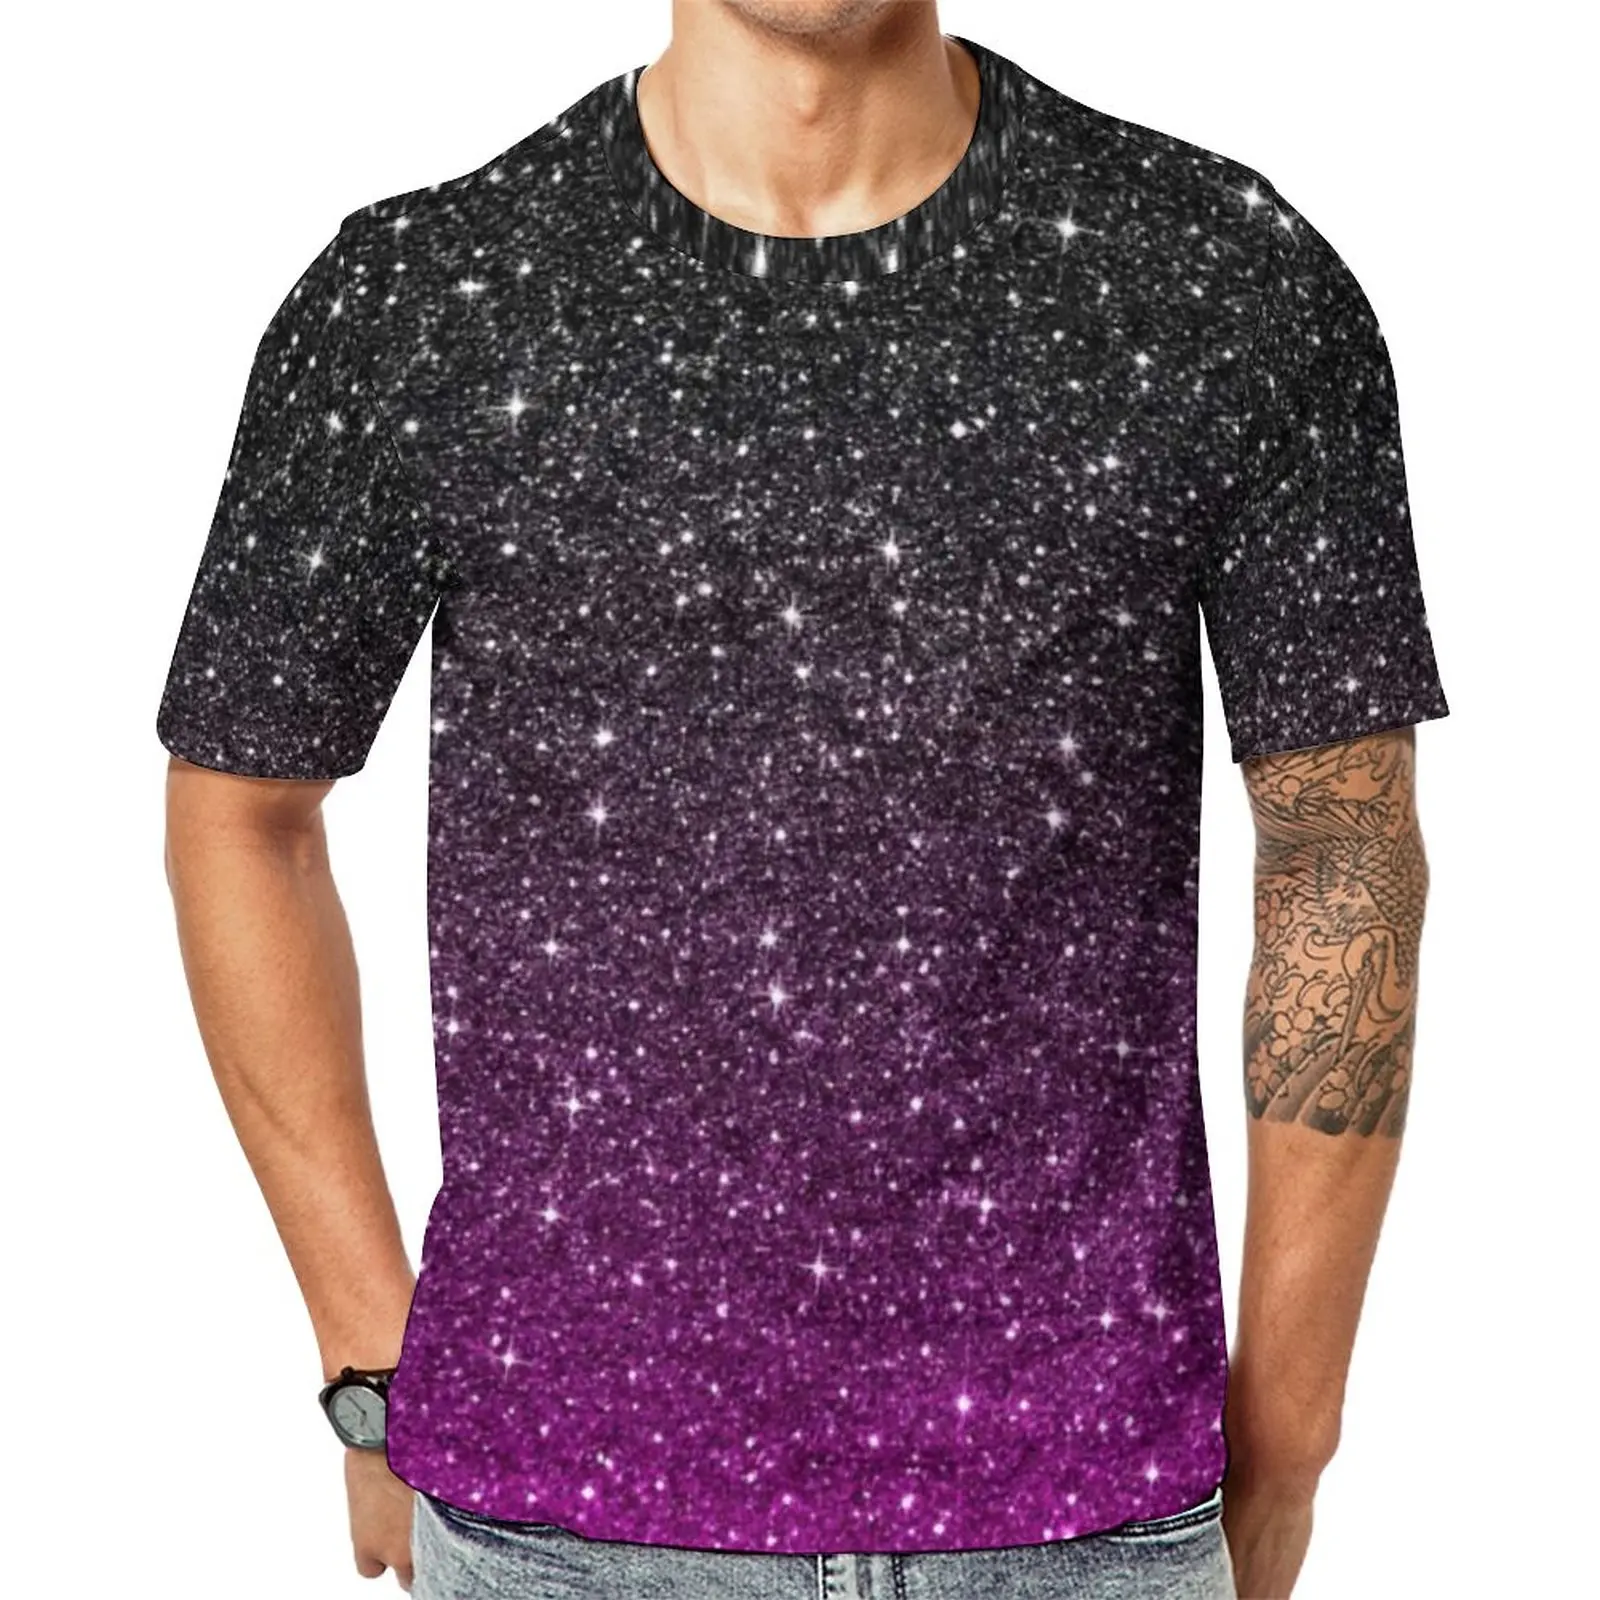 

Bling Star T-Shirt Stars Are Out Tonight Pop Galaxy Hip Hop T-Shirts Short-Sleeve Design Tshirt Cheap Classic Oversized Top Tees